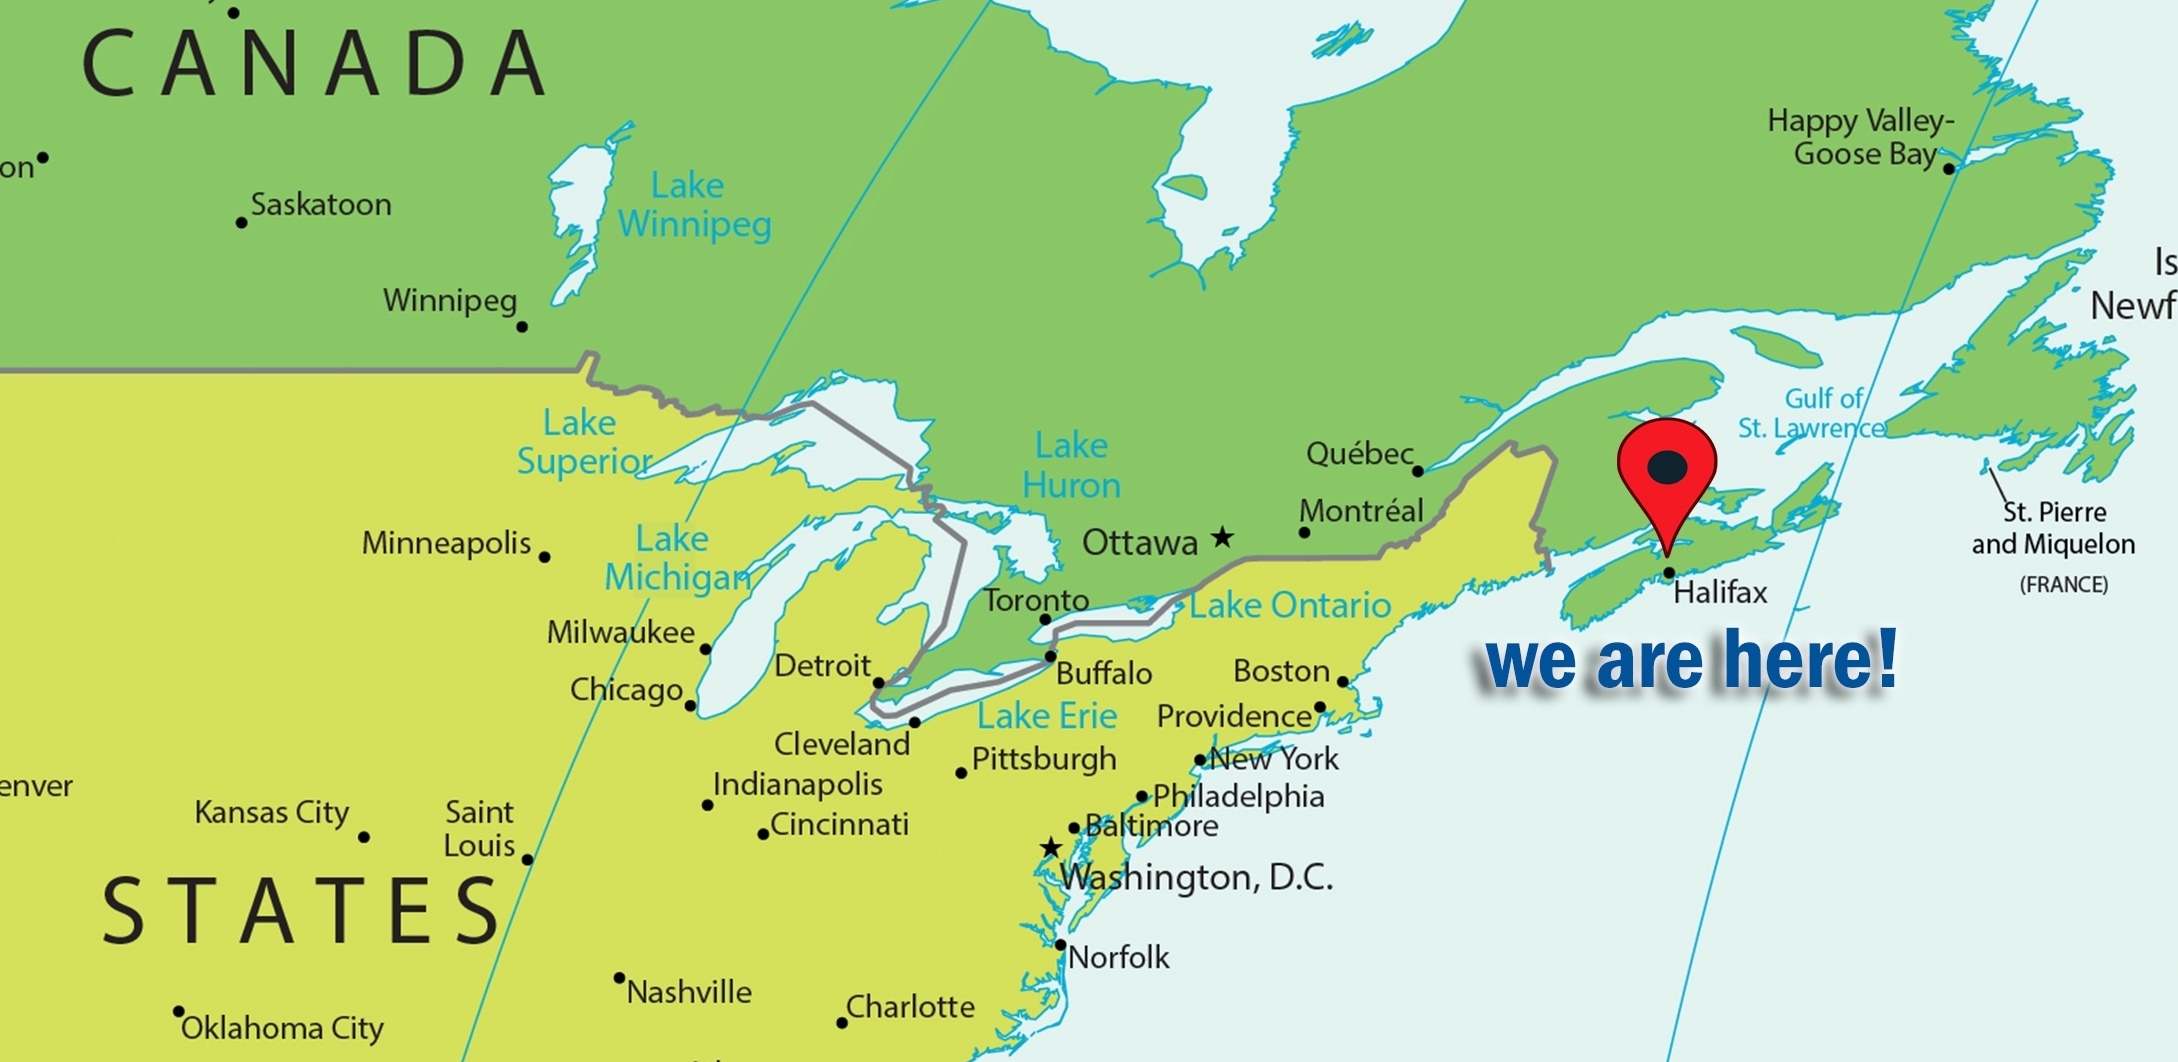 Halifax on world map1